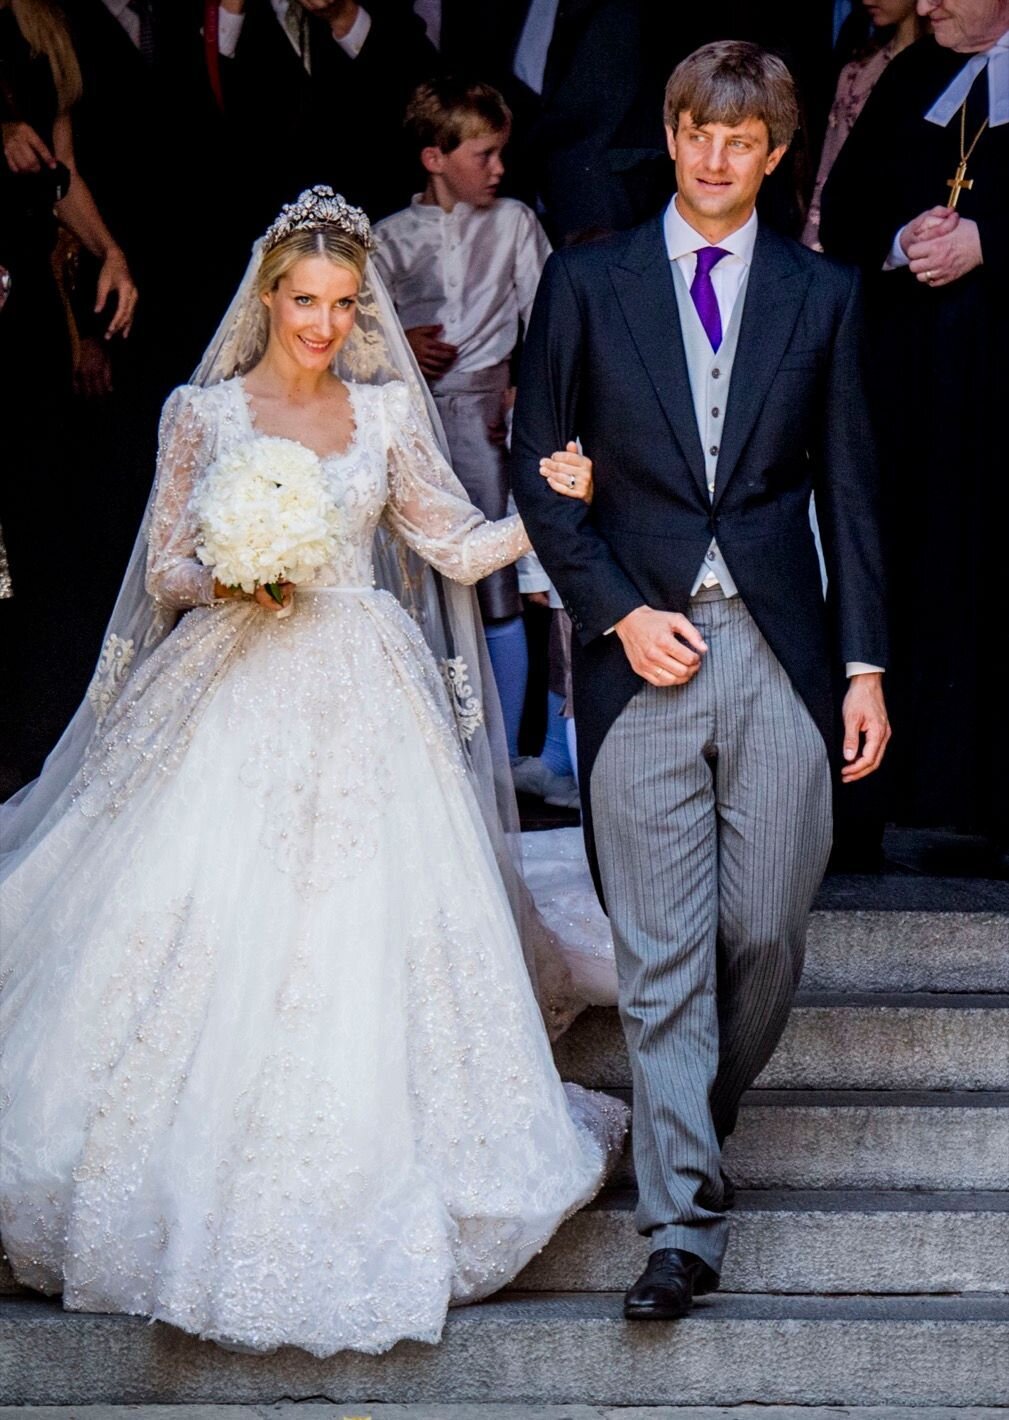 Wedding of Hereditary Prince Ernst August and Ekaterina Malysheva ...